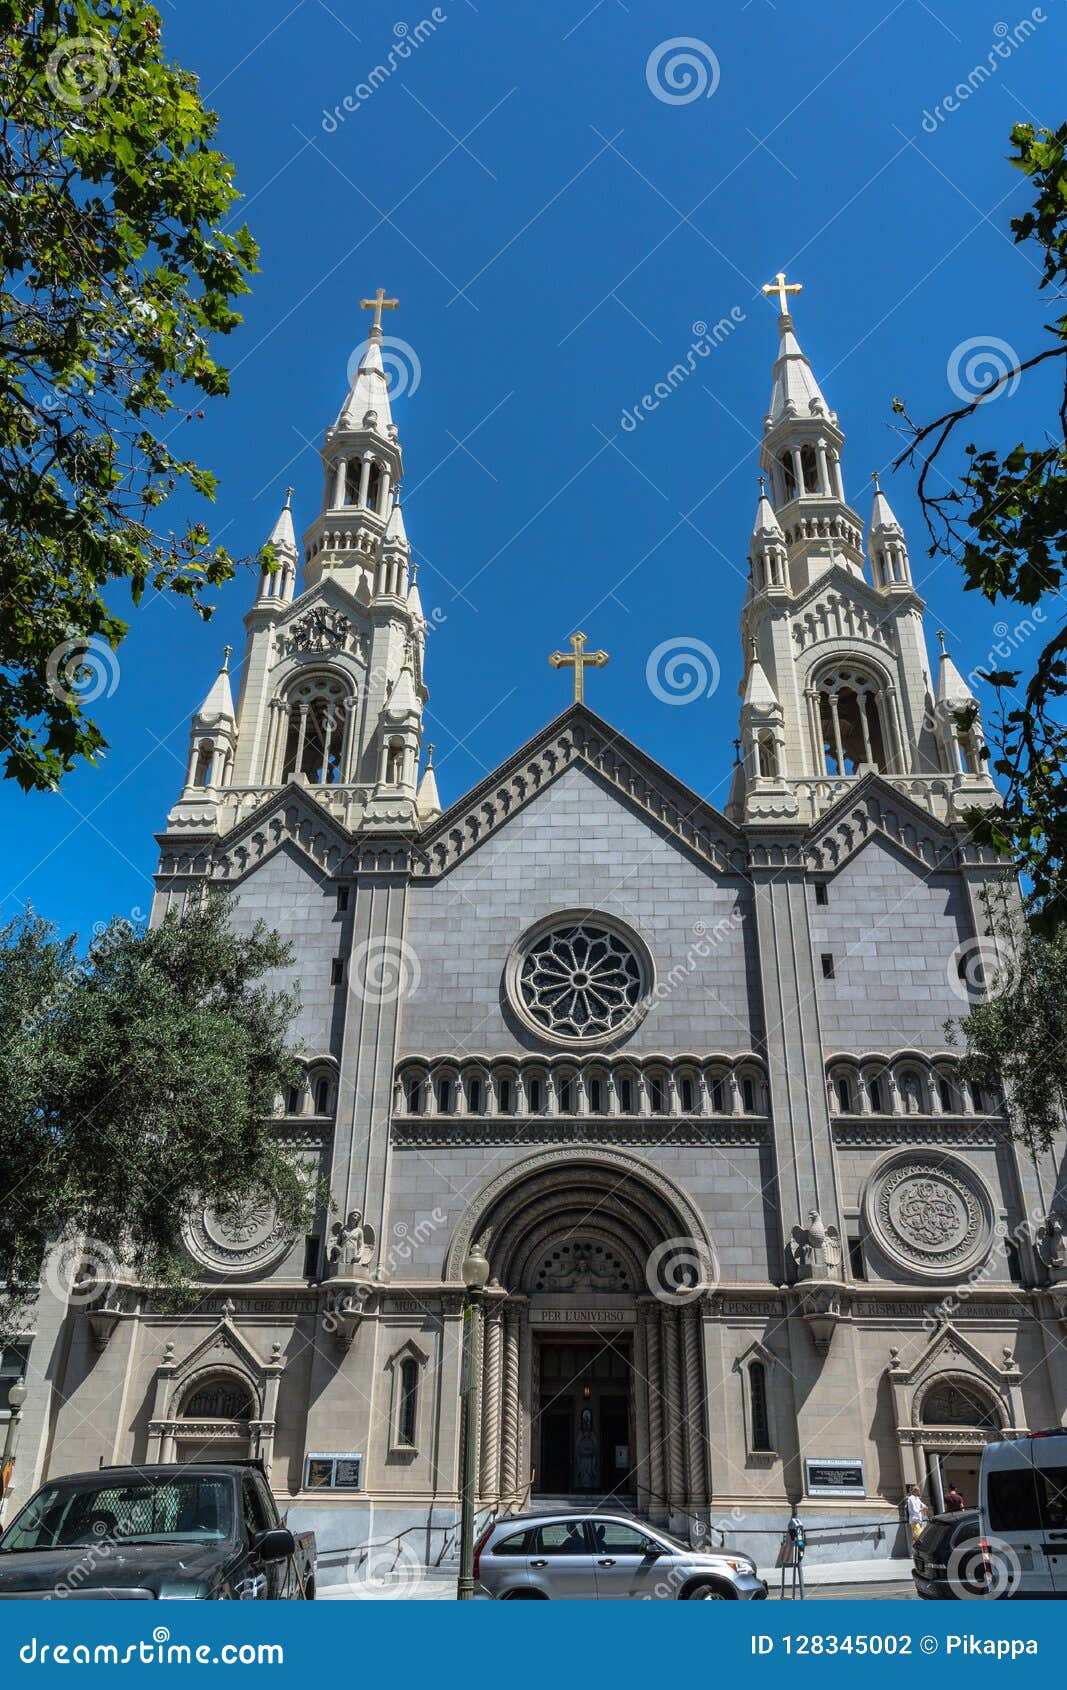 Catholic Church in San Francisco, California. San Francisco,California,USA - June 12, 2018 : Saint Peter and Paul Church in Filbert Street